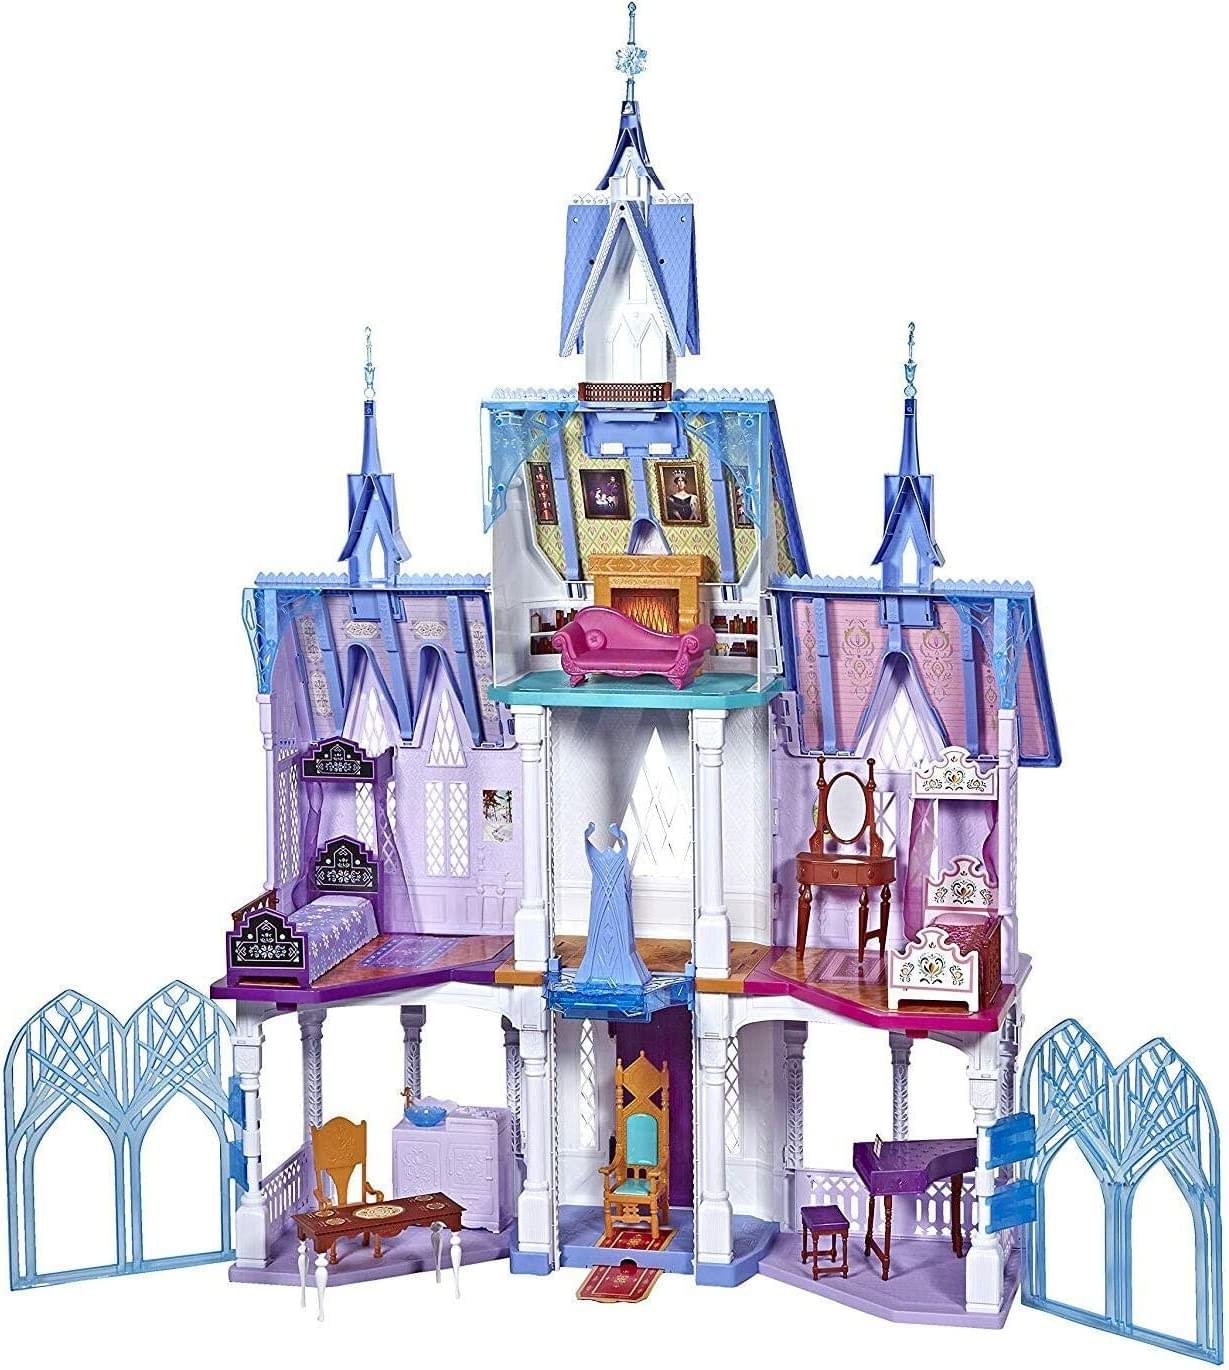 Disney Frozen Ultimate Arendelle Castle Playset